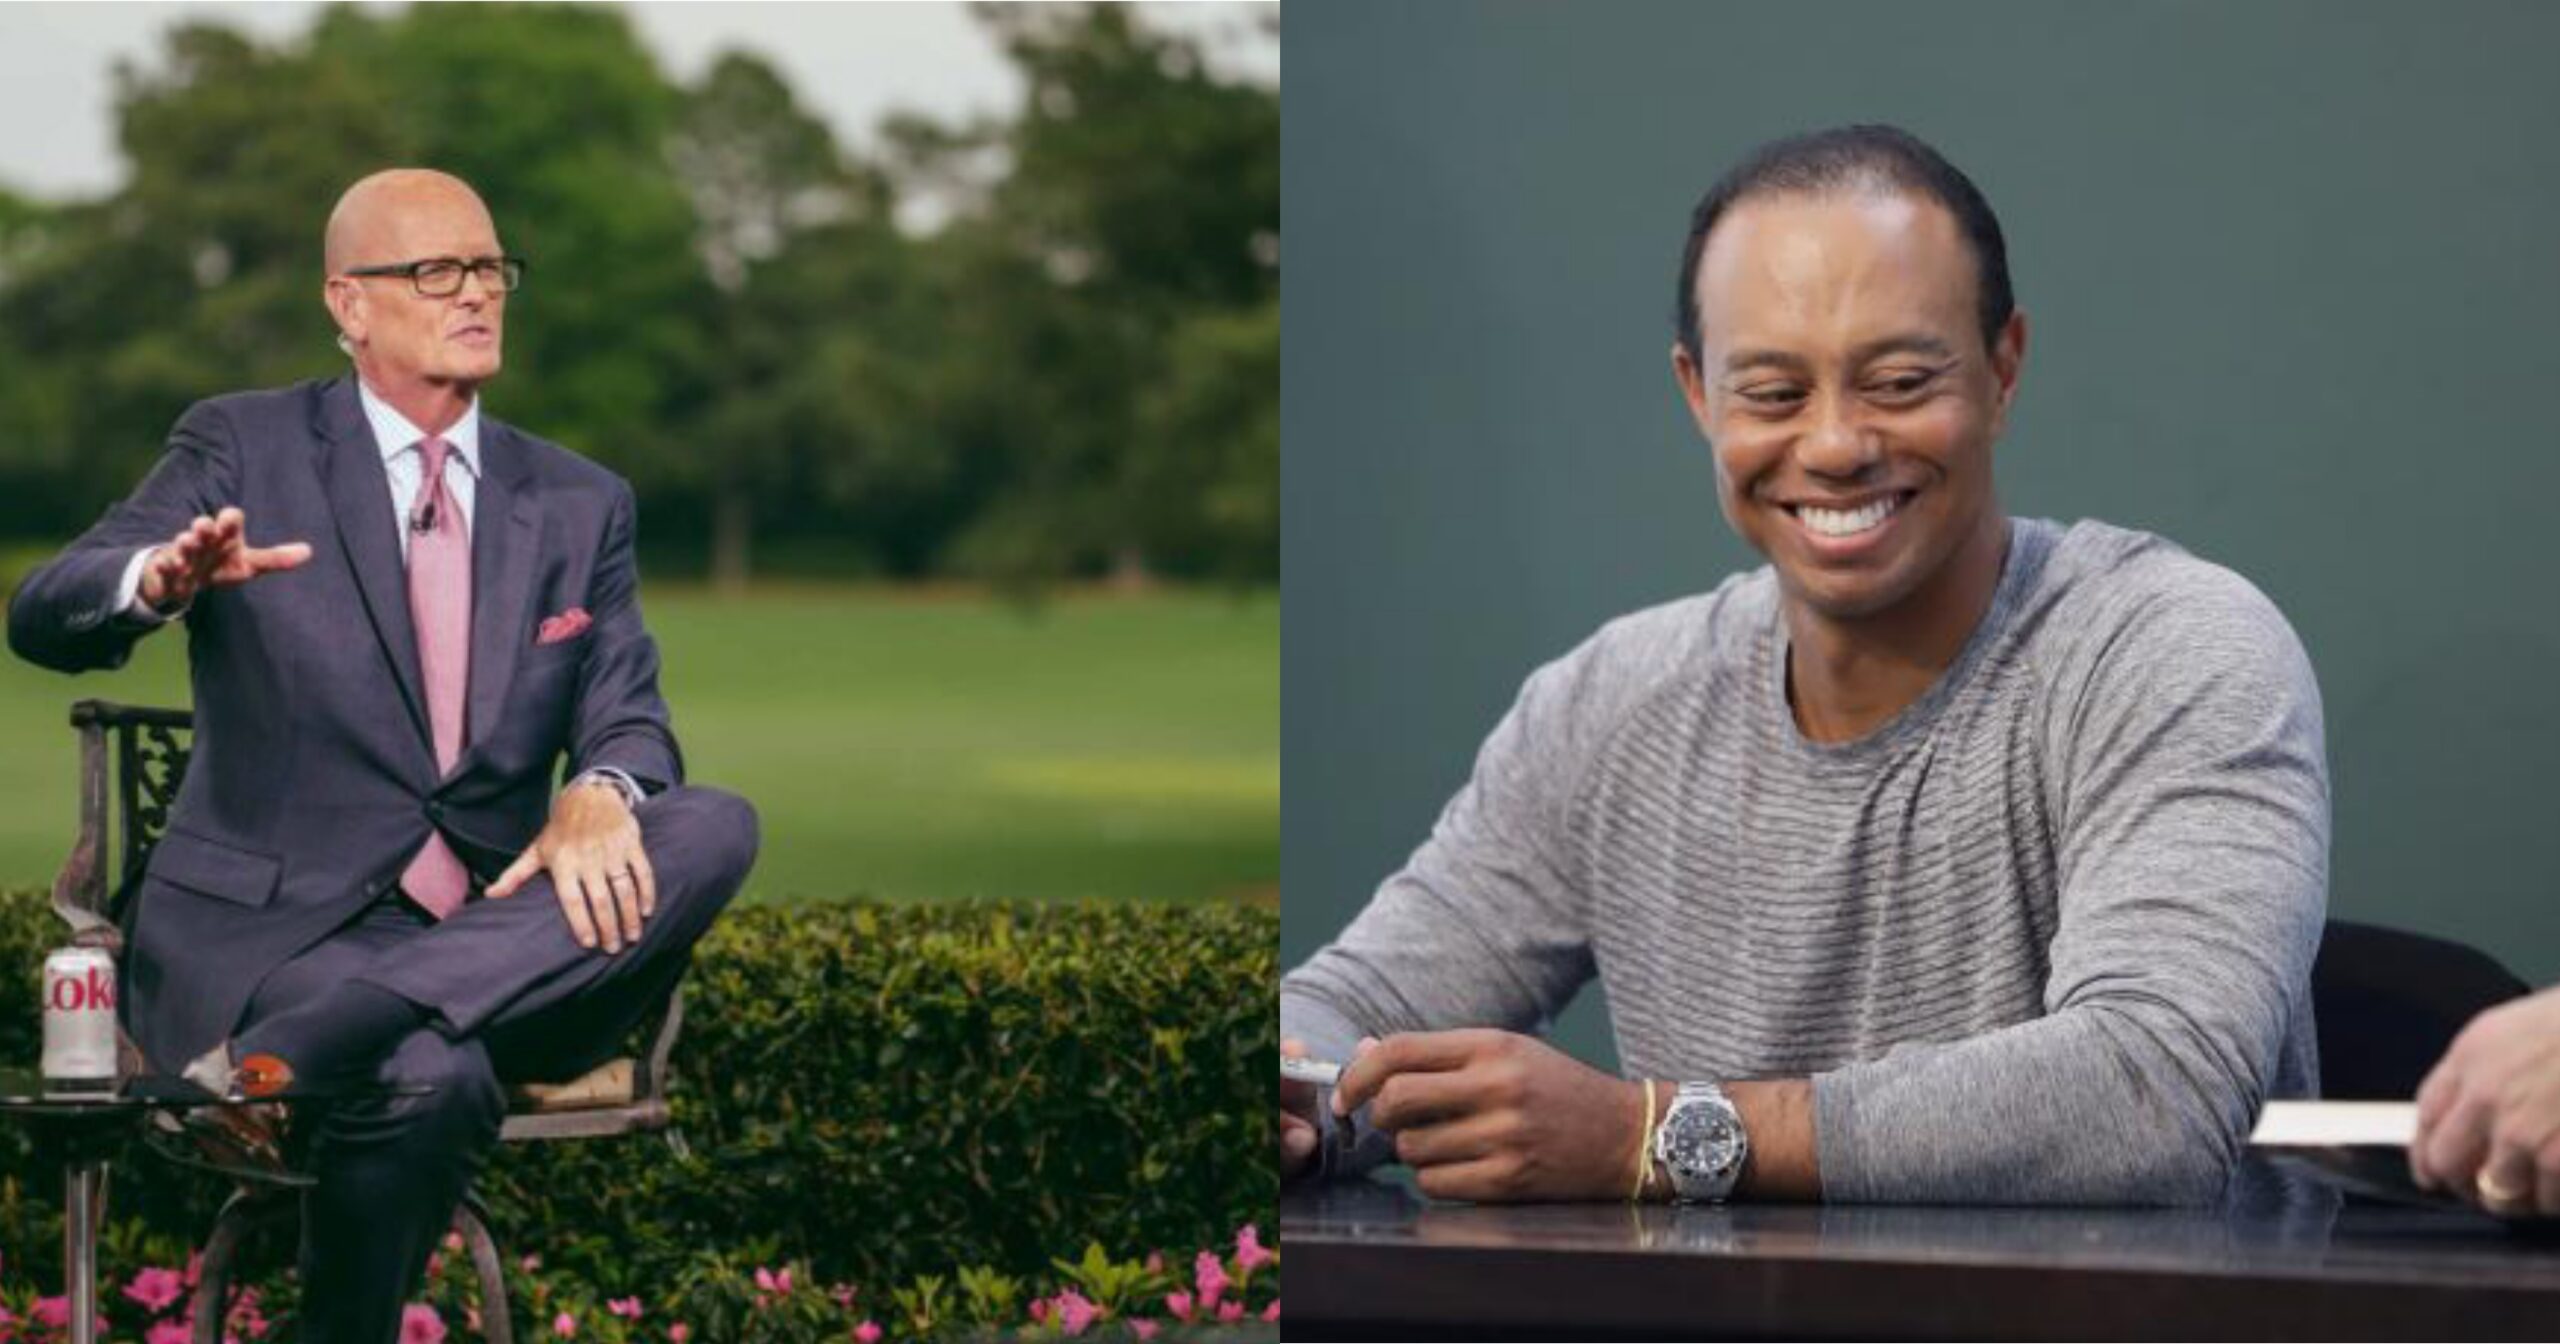 Scott Van Pelt: Interview with Tiger Woods ‘put me on the radar’